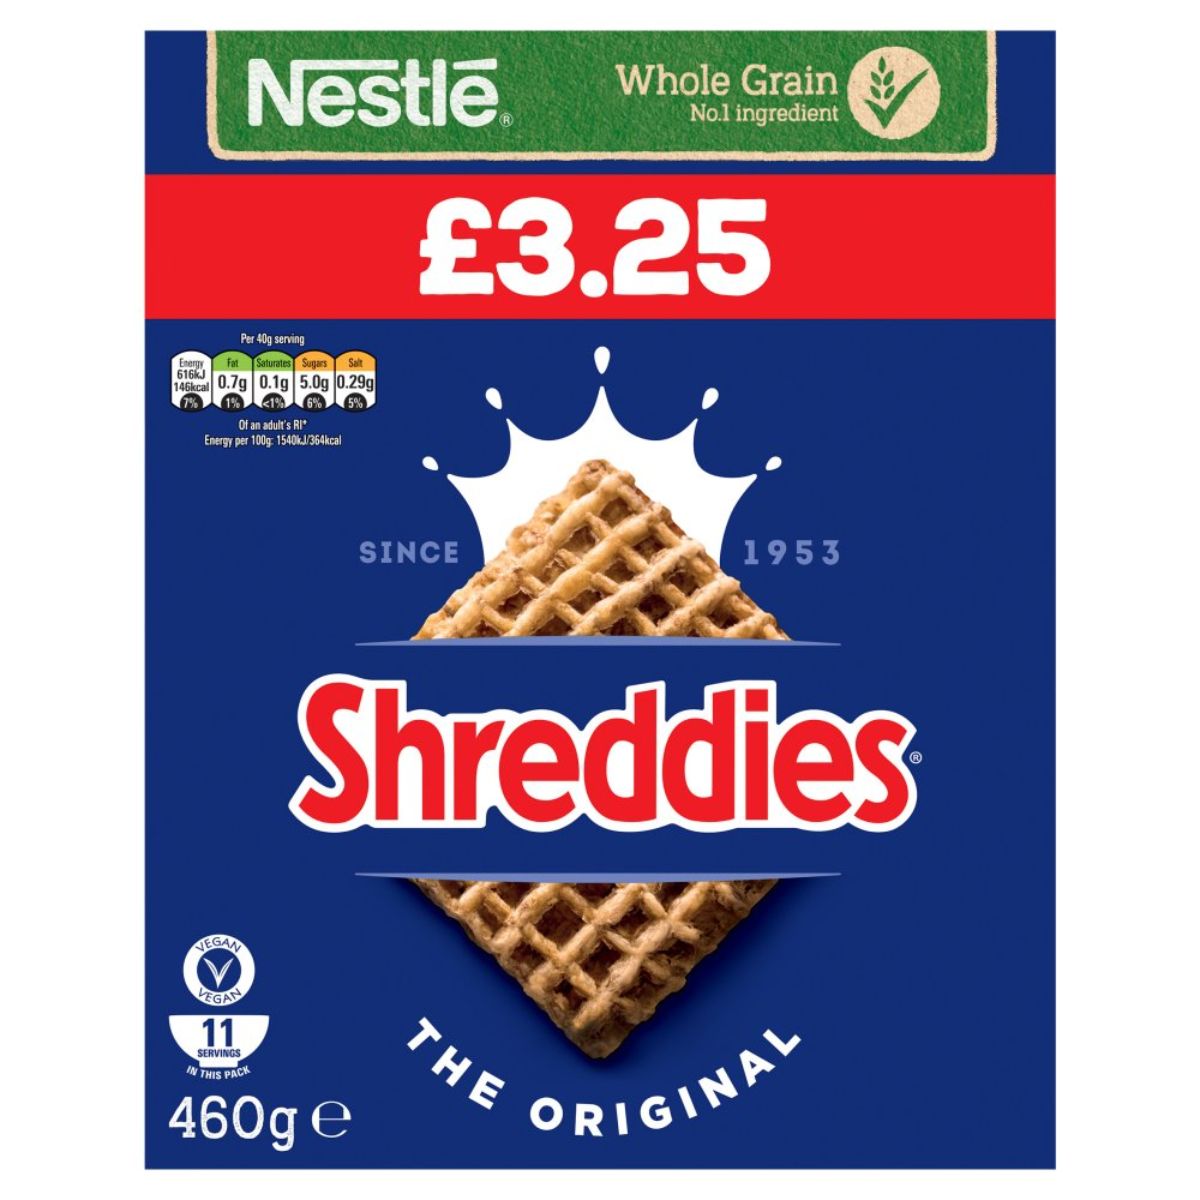 A box of Nestle - Shreddies - 460g.